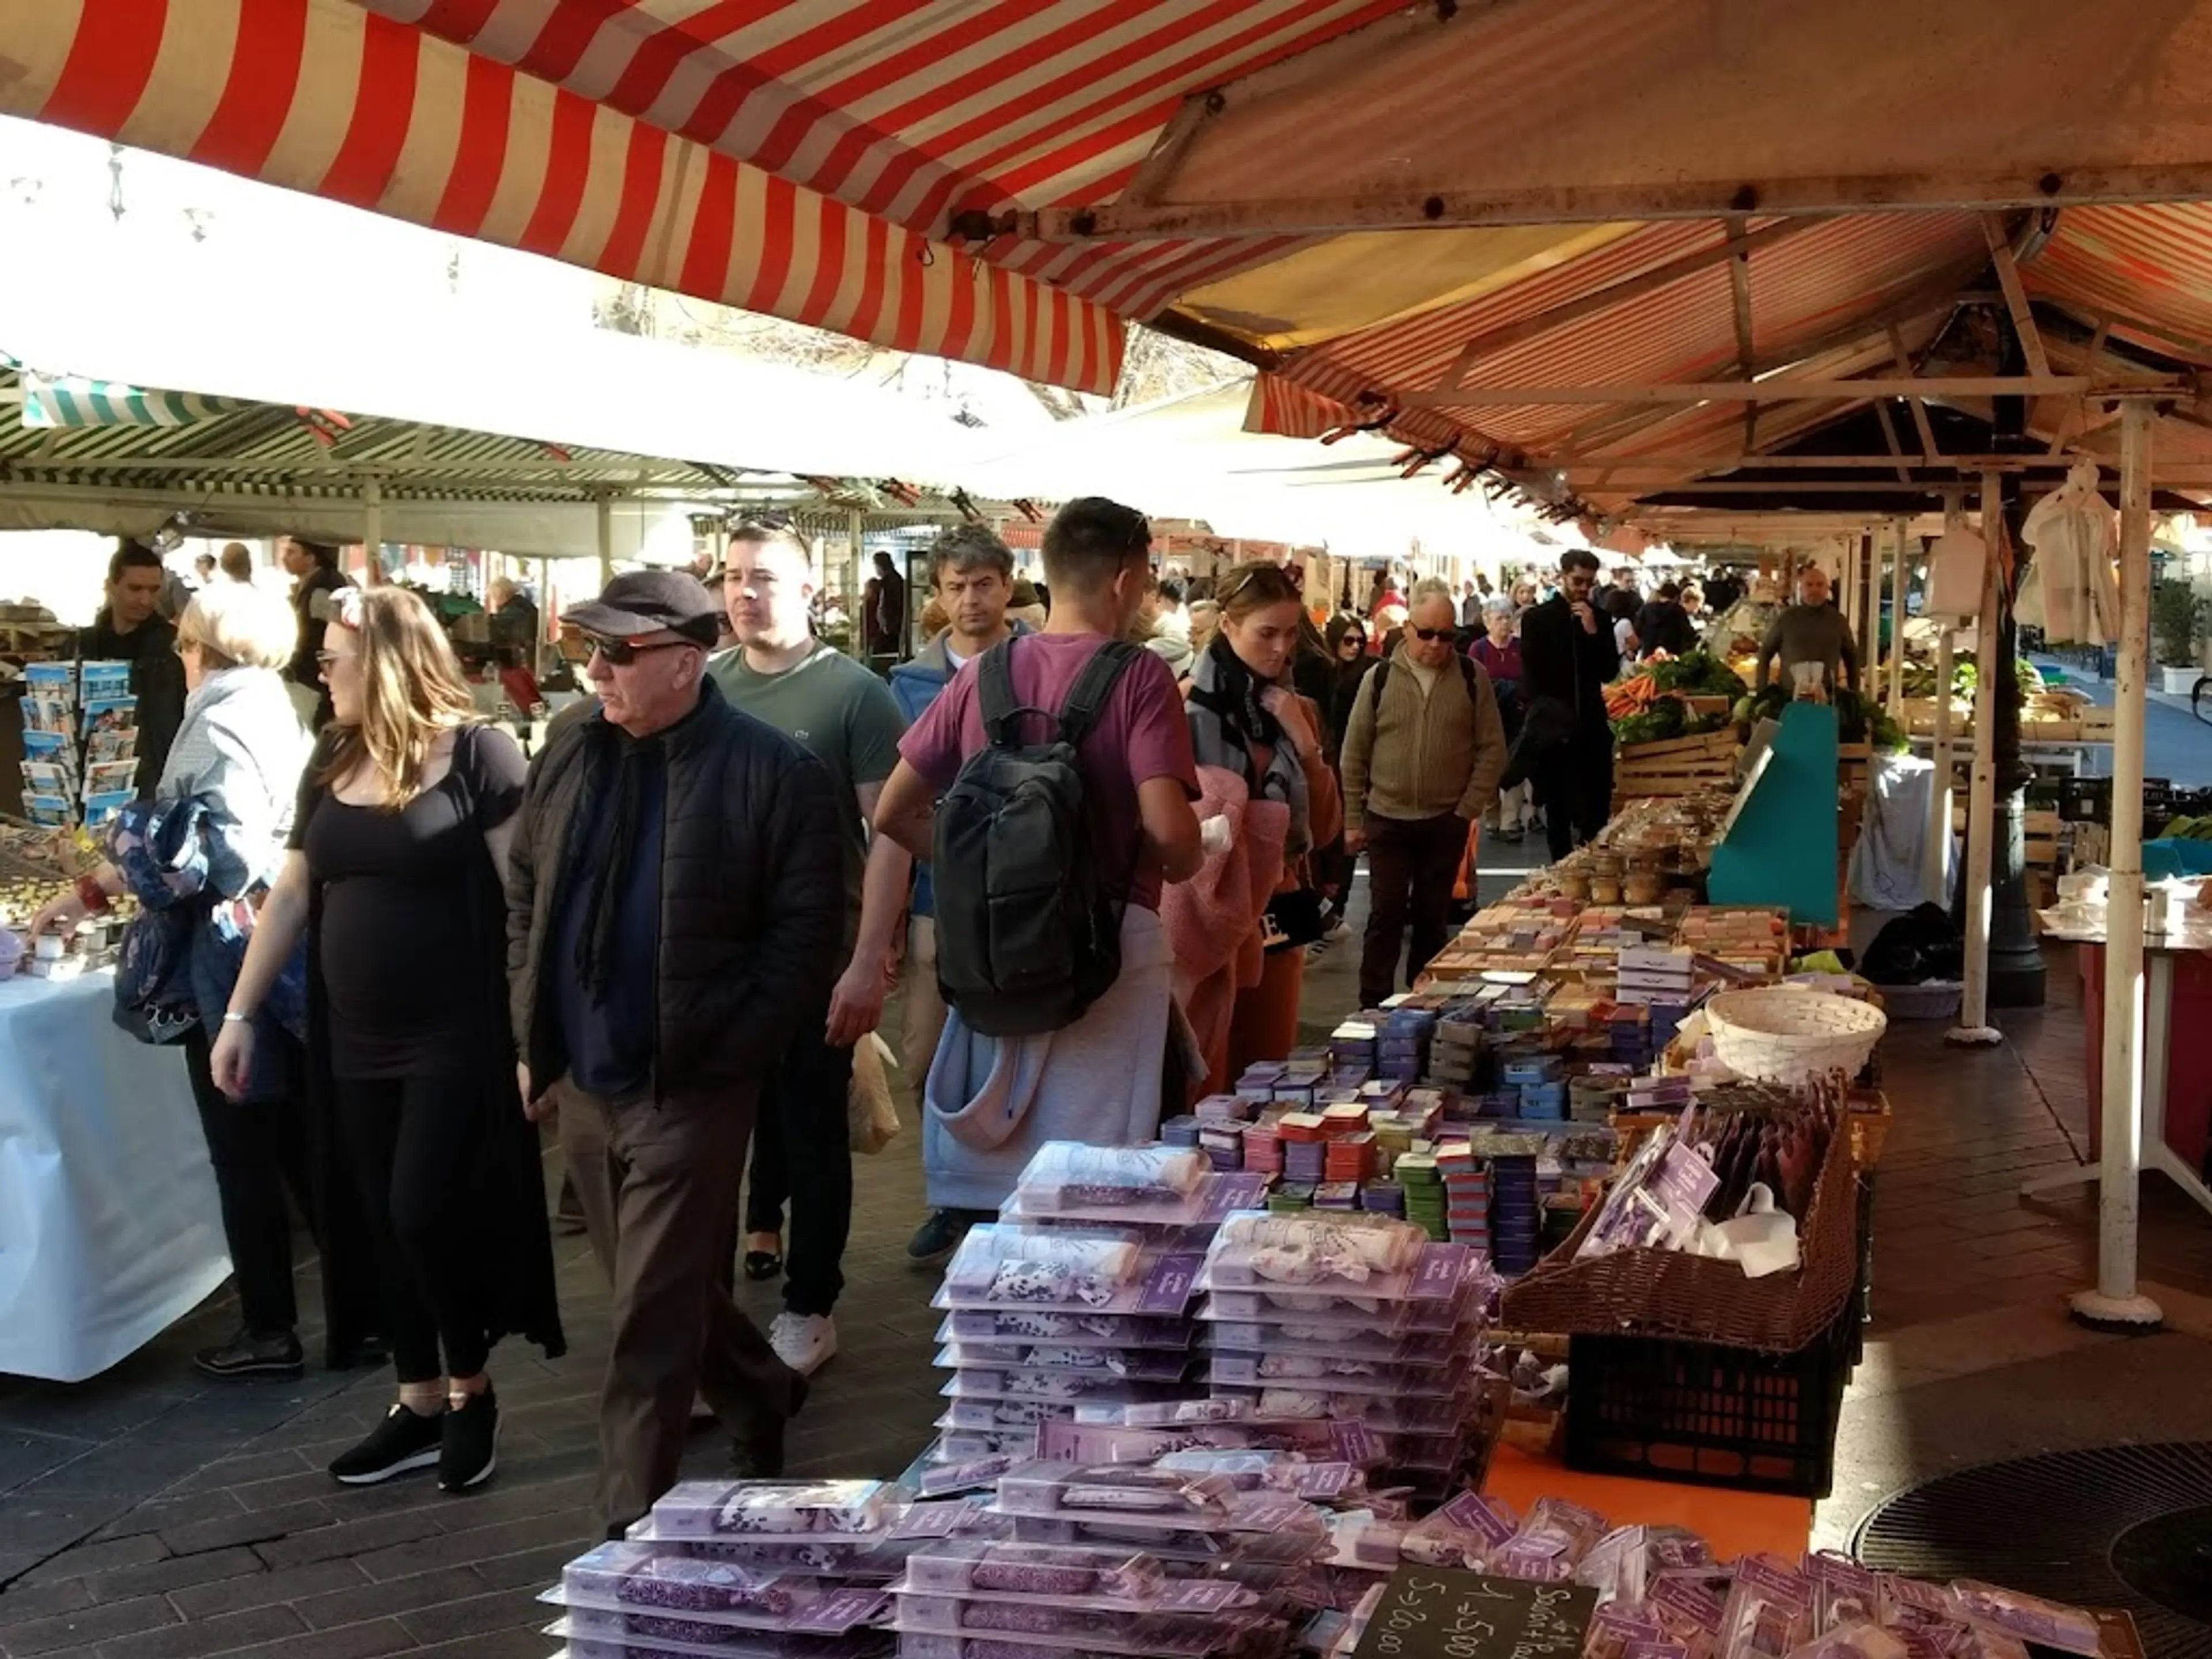 Cours Saleya market